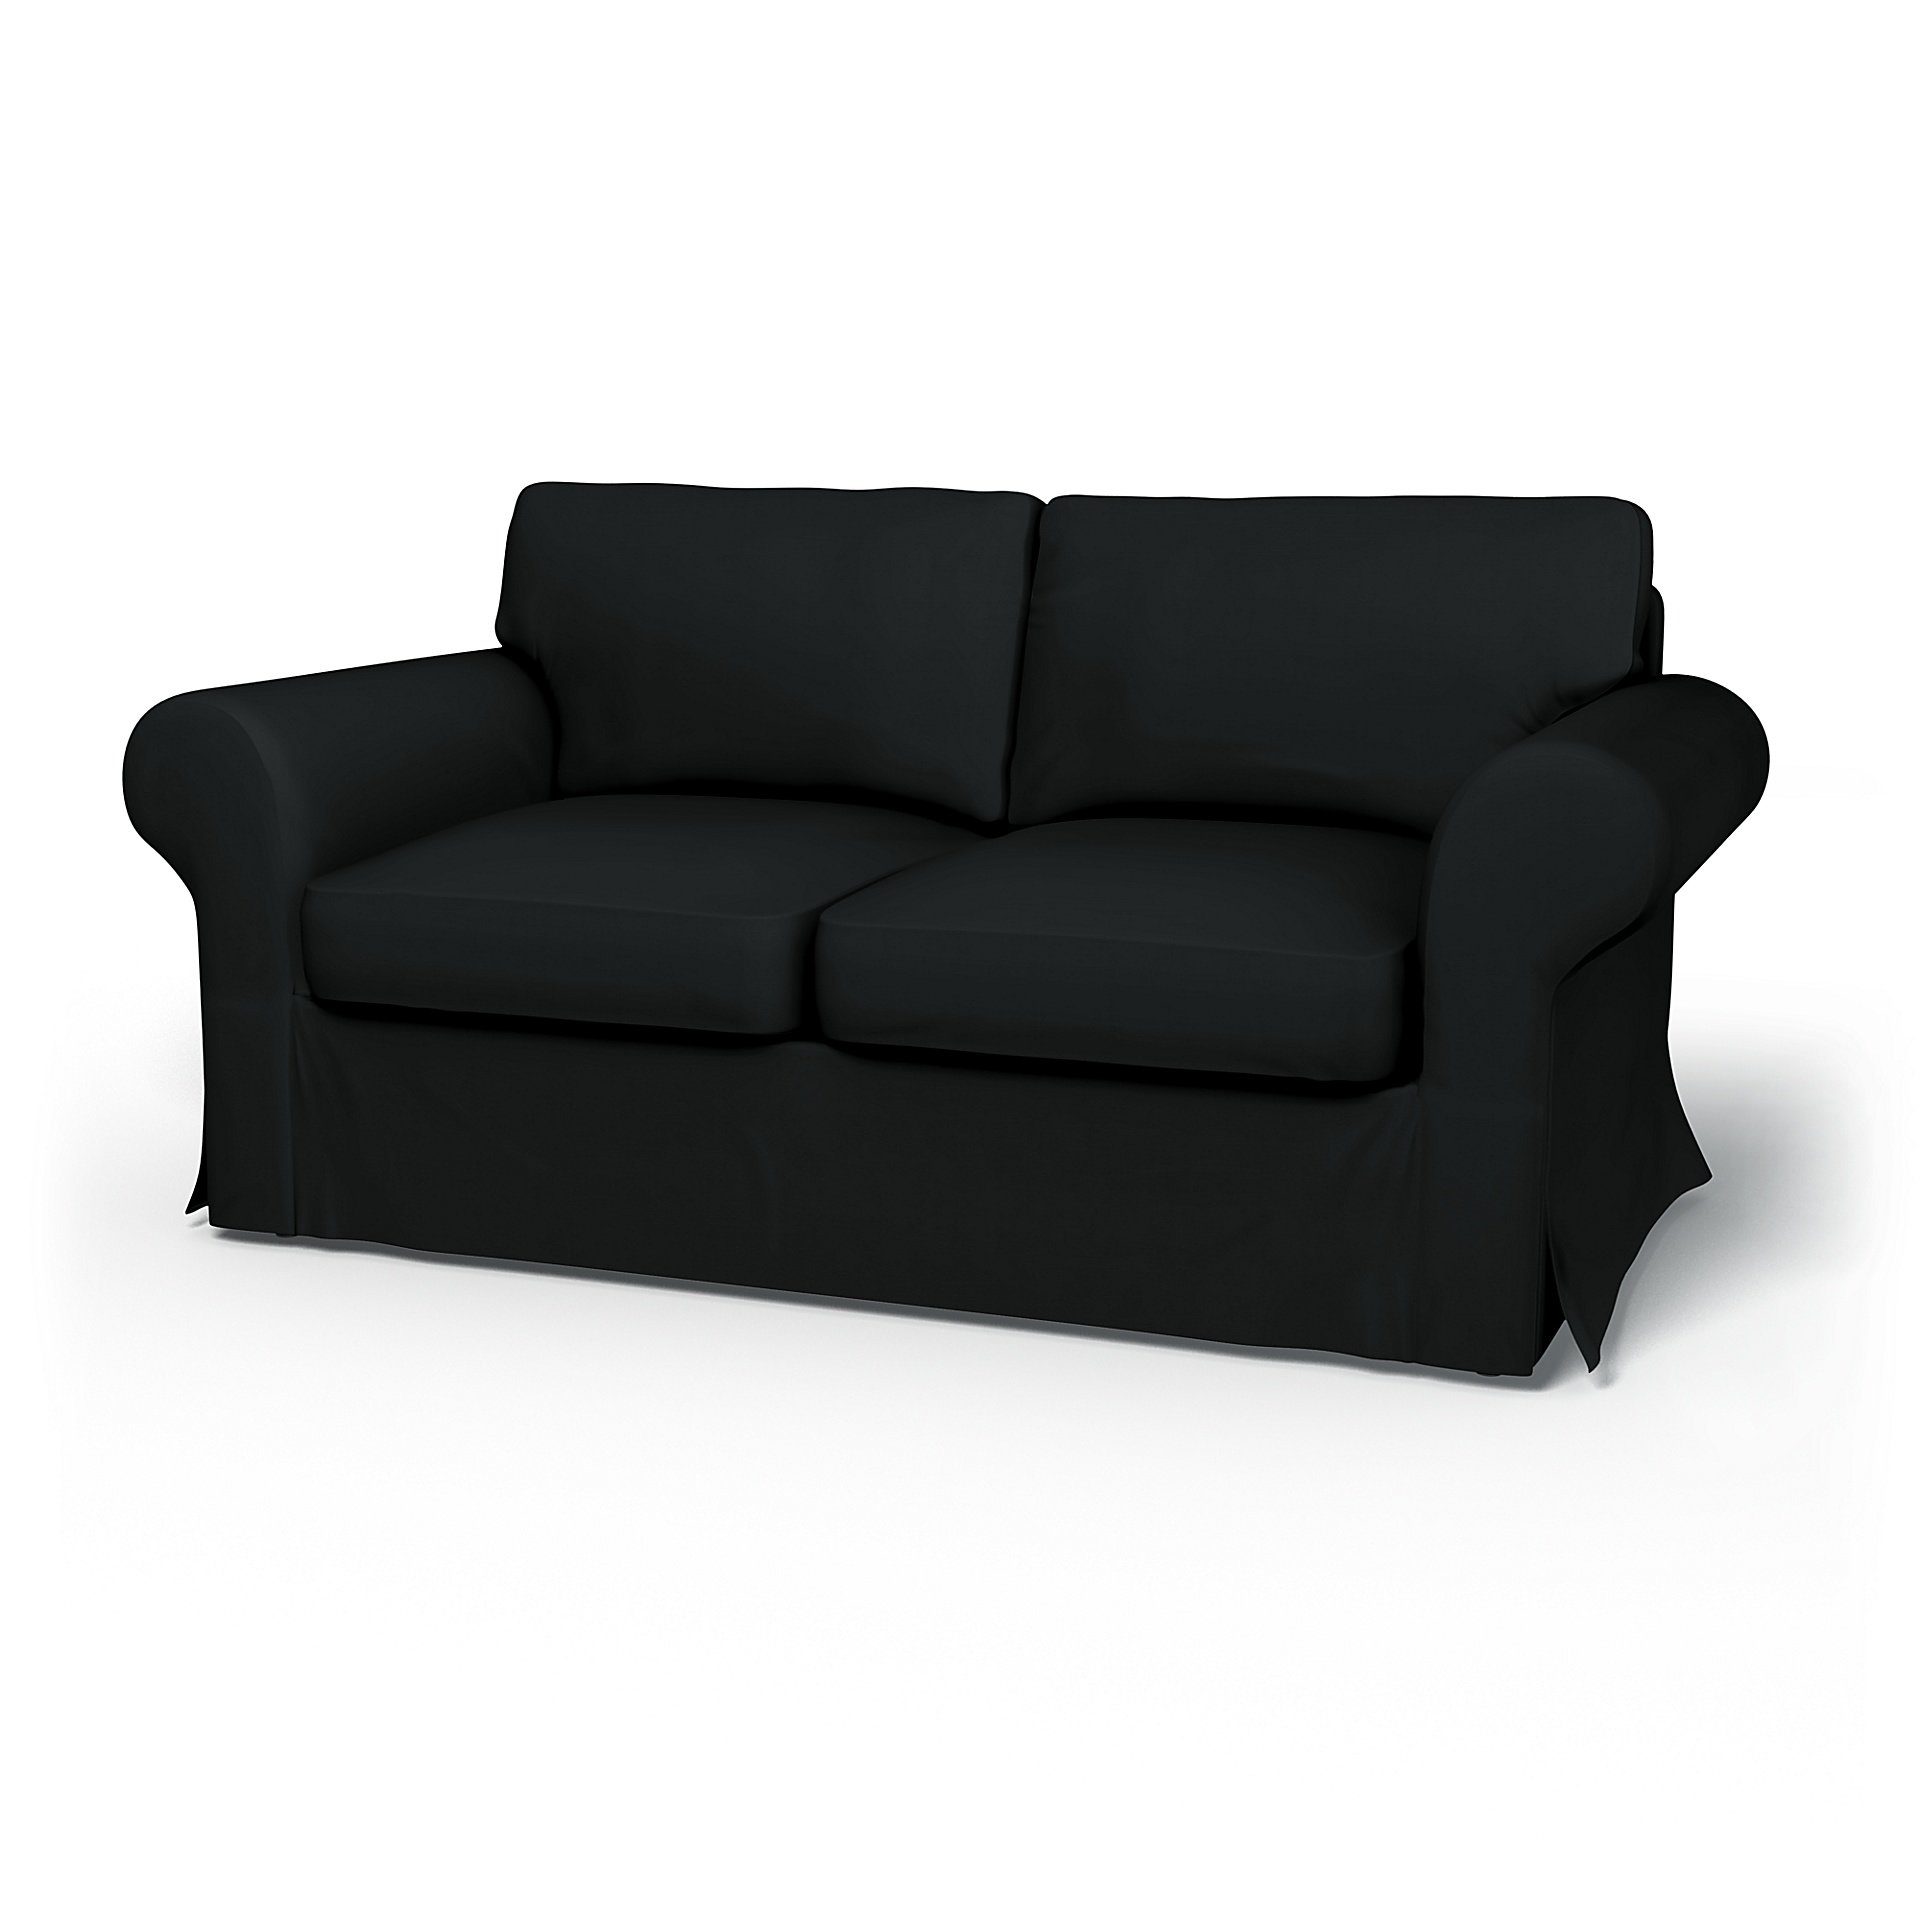 IKEA - Ektorp 2 Seater Sofa Bed Cover, Jet Black, Cotton - Bemz